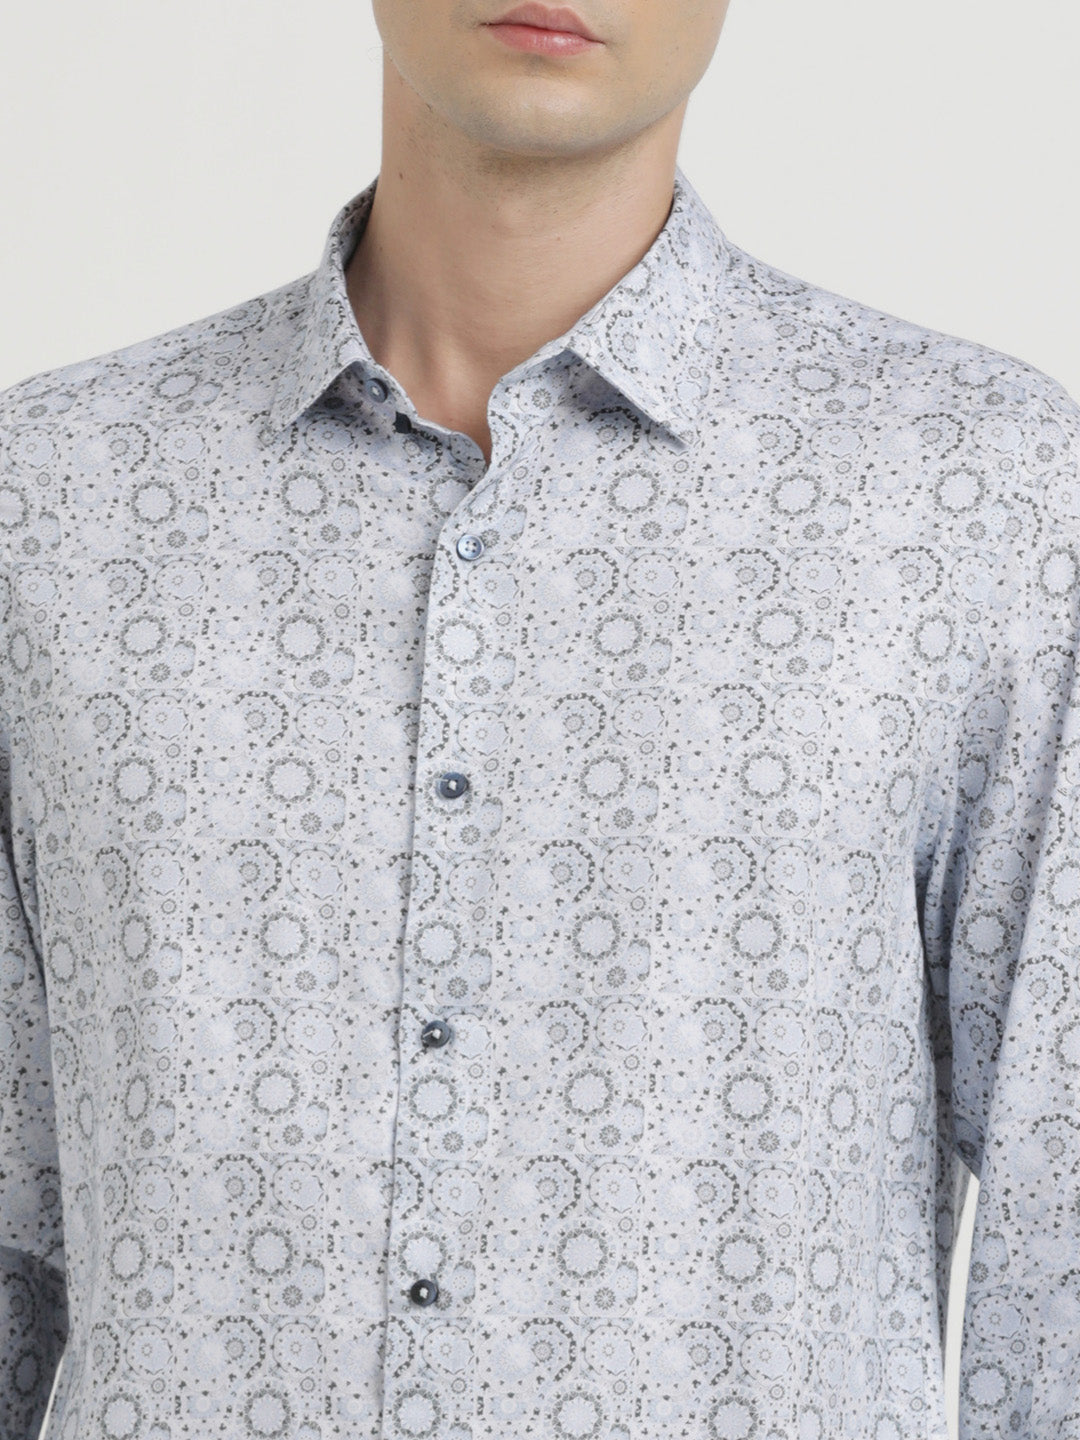 Cotton Tencel Grey Printed Slim Fit Full Sleeve Ceremonial Shirt